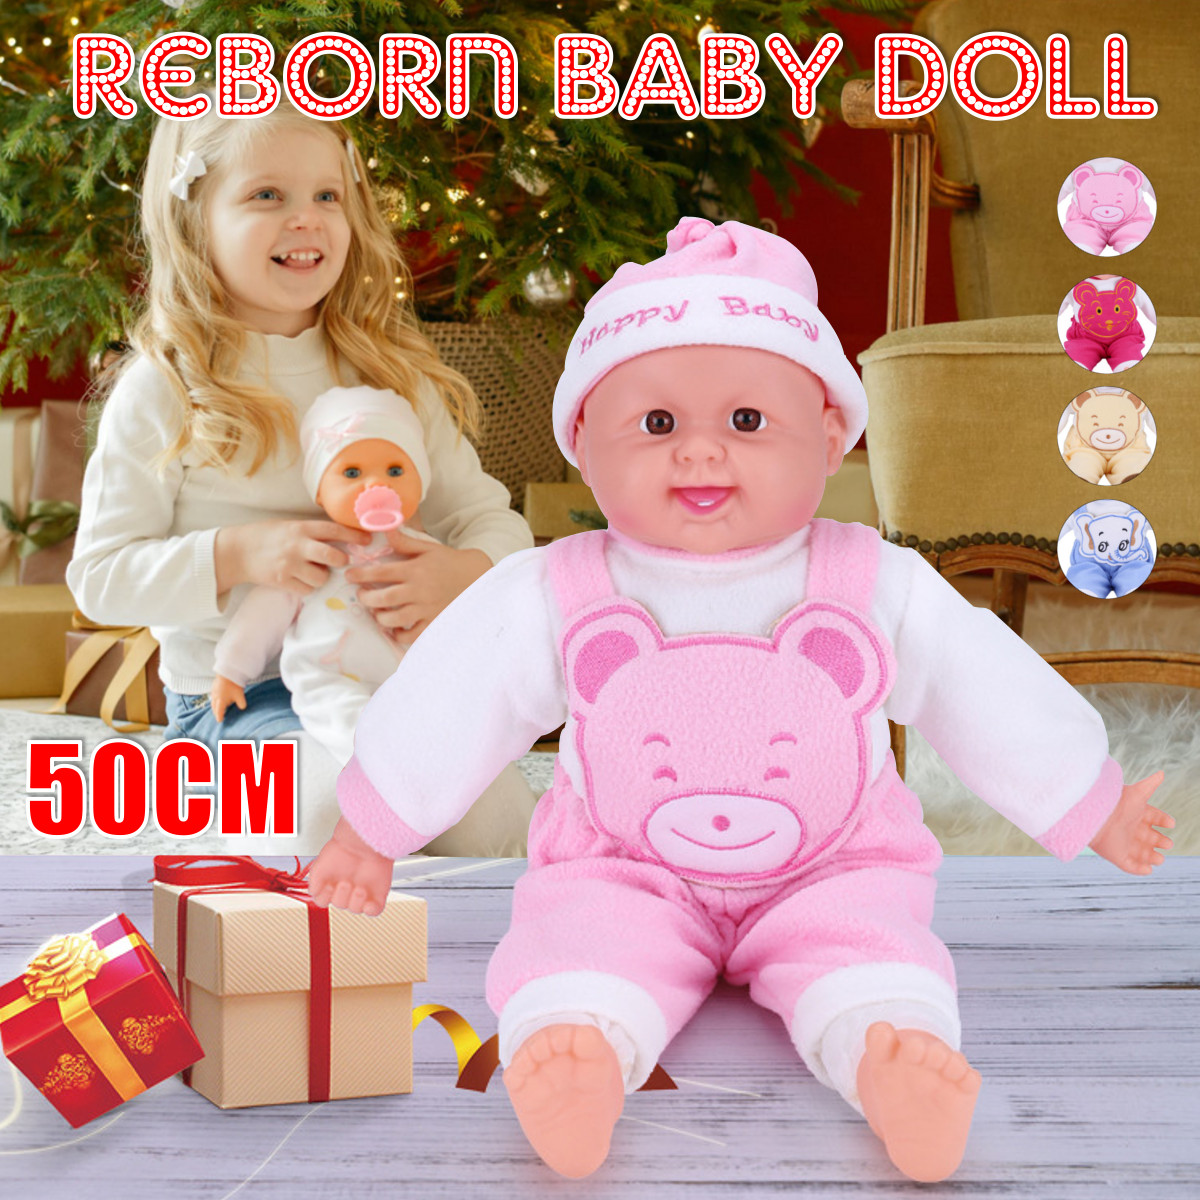 50CM-Multi-color-Simulation-Silicone-Vinyl-Lifelike-Realistic-Reborn-Newborn-Baby-Doll-Toy-with-Clot-1815387-1